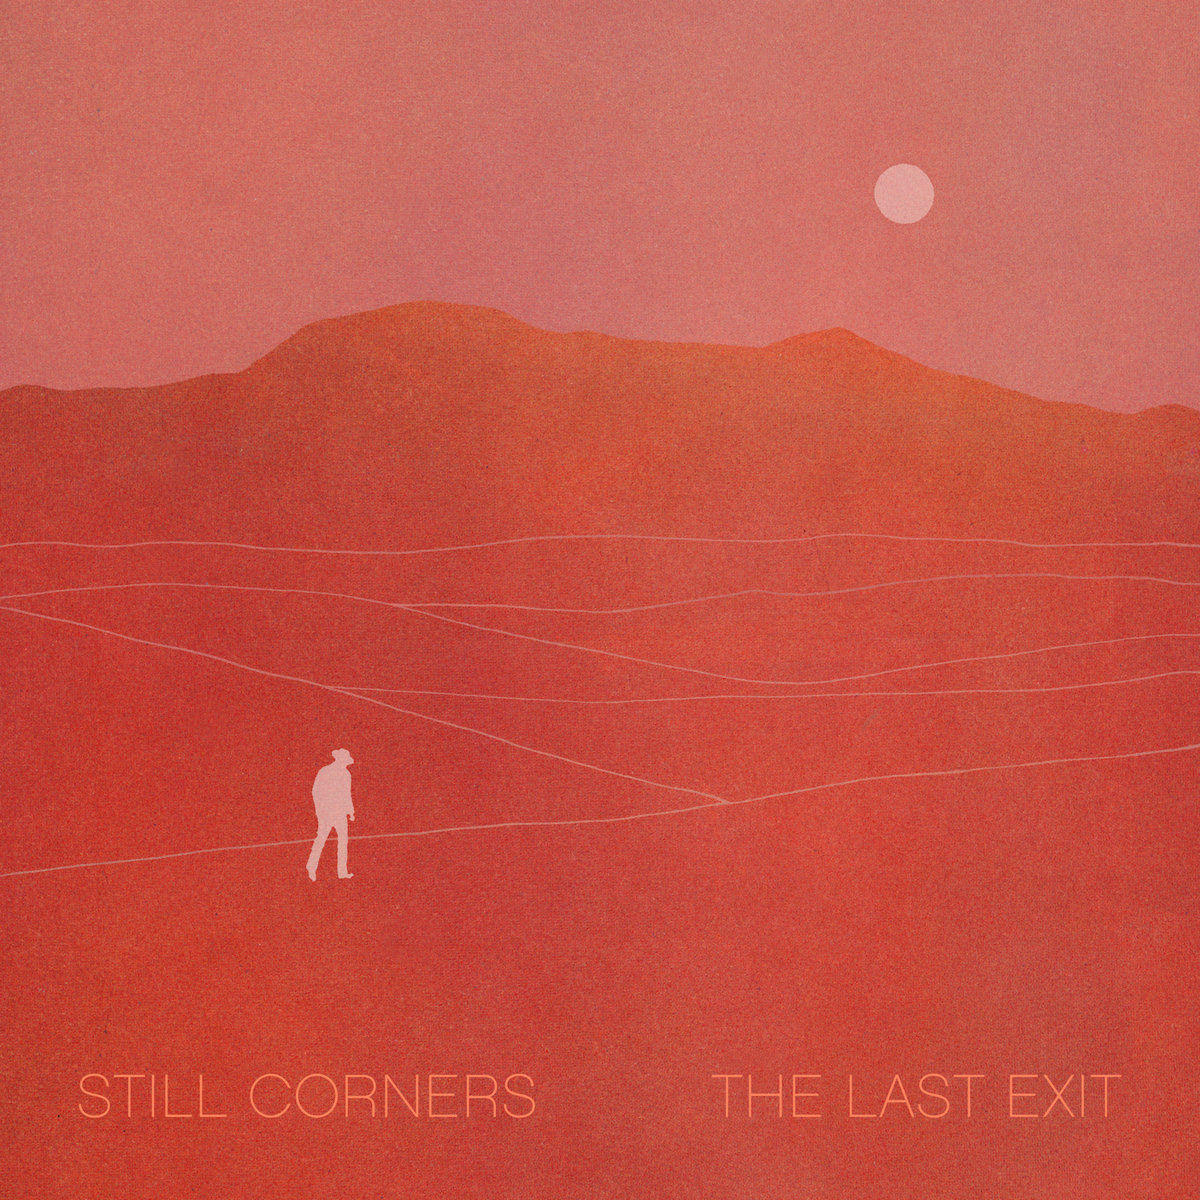 Still Corners "The Last Exit" LP